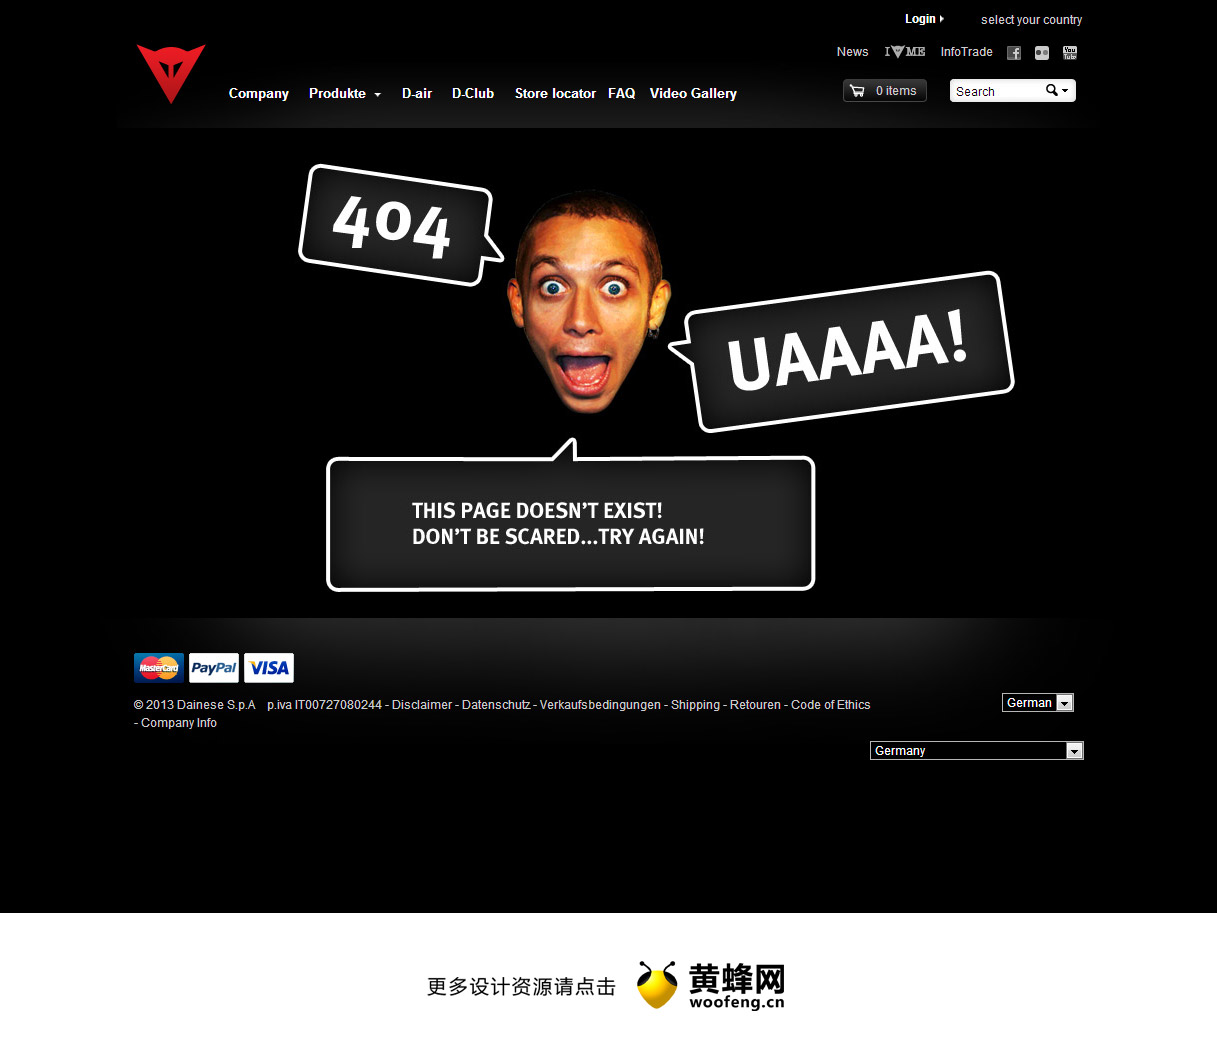 Dainese网站404创意页面设计，来源自黄蜂网https://woofeng.cn/webcut/